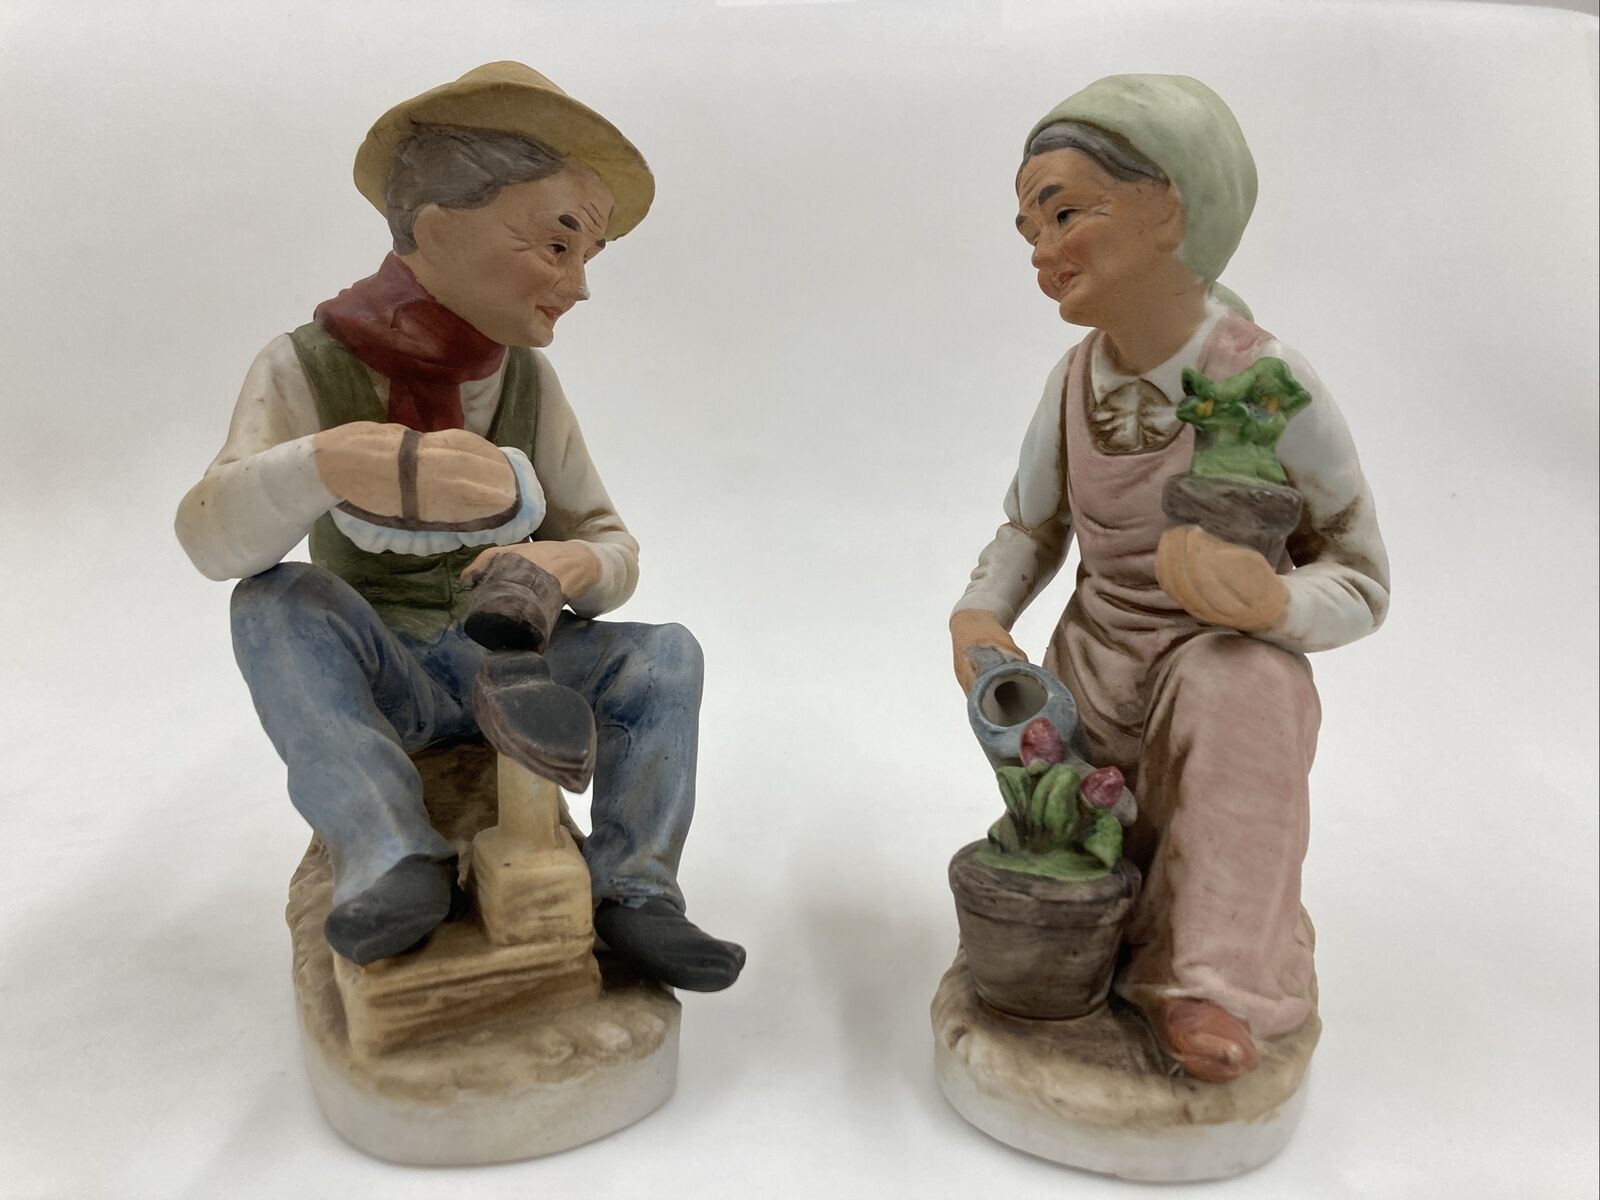 Vintage Porcelain Elderly Couple Figurines Shoe Shine And Gardening 6-3/4” Tall